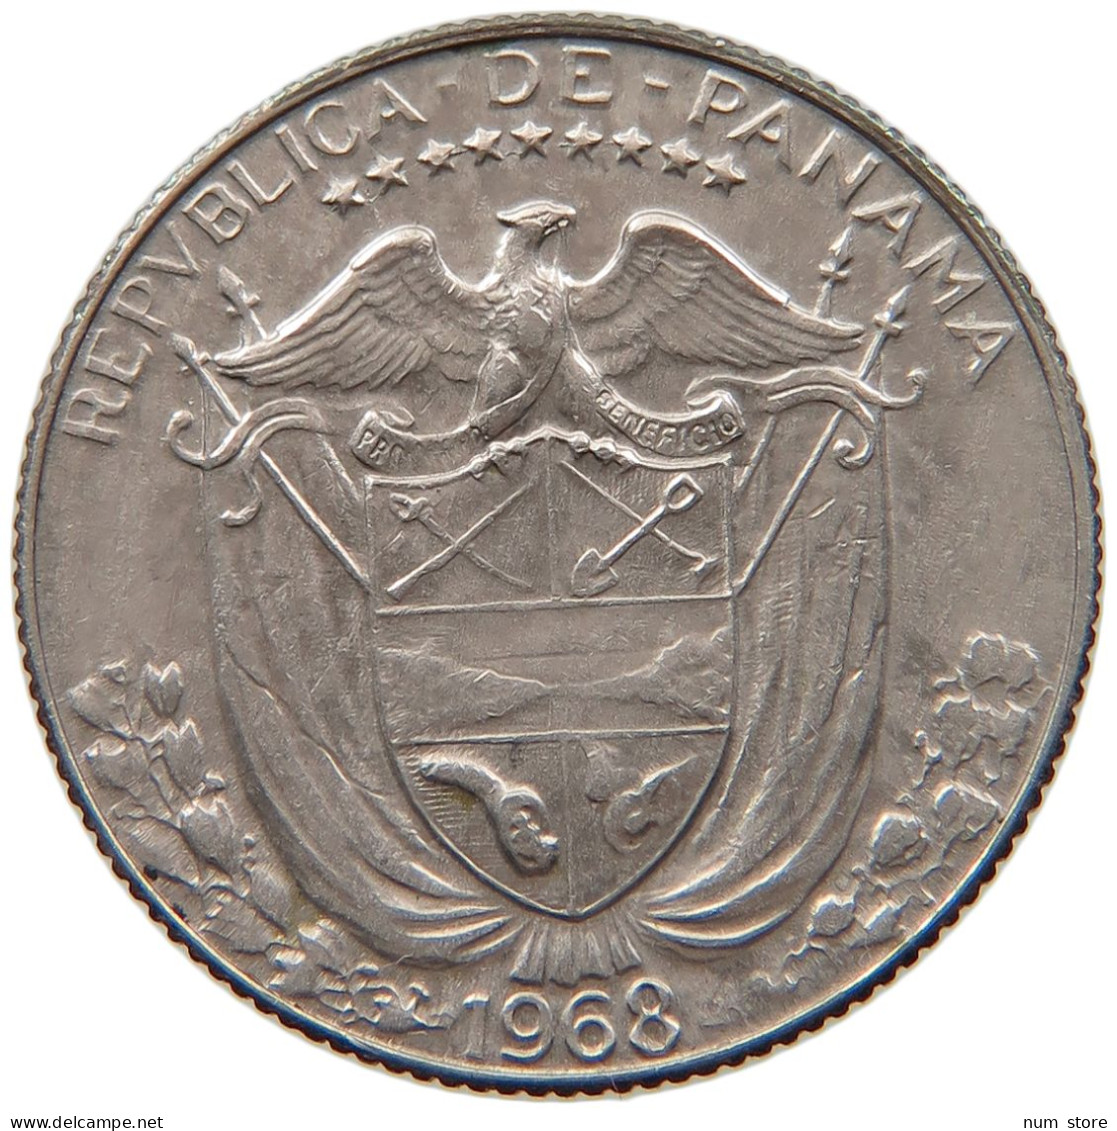 PANAMA 1/4 BALBOA 1968  #MA 063034 - Panamá